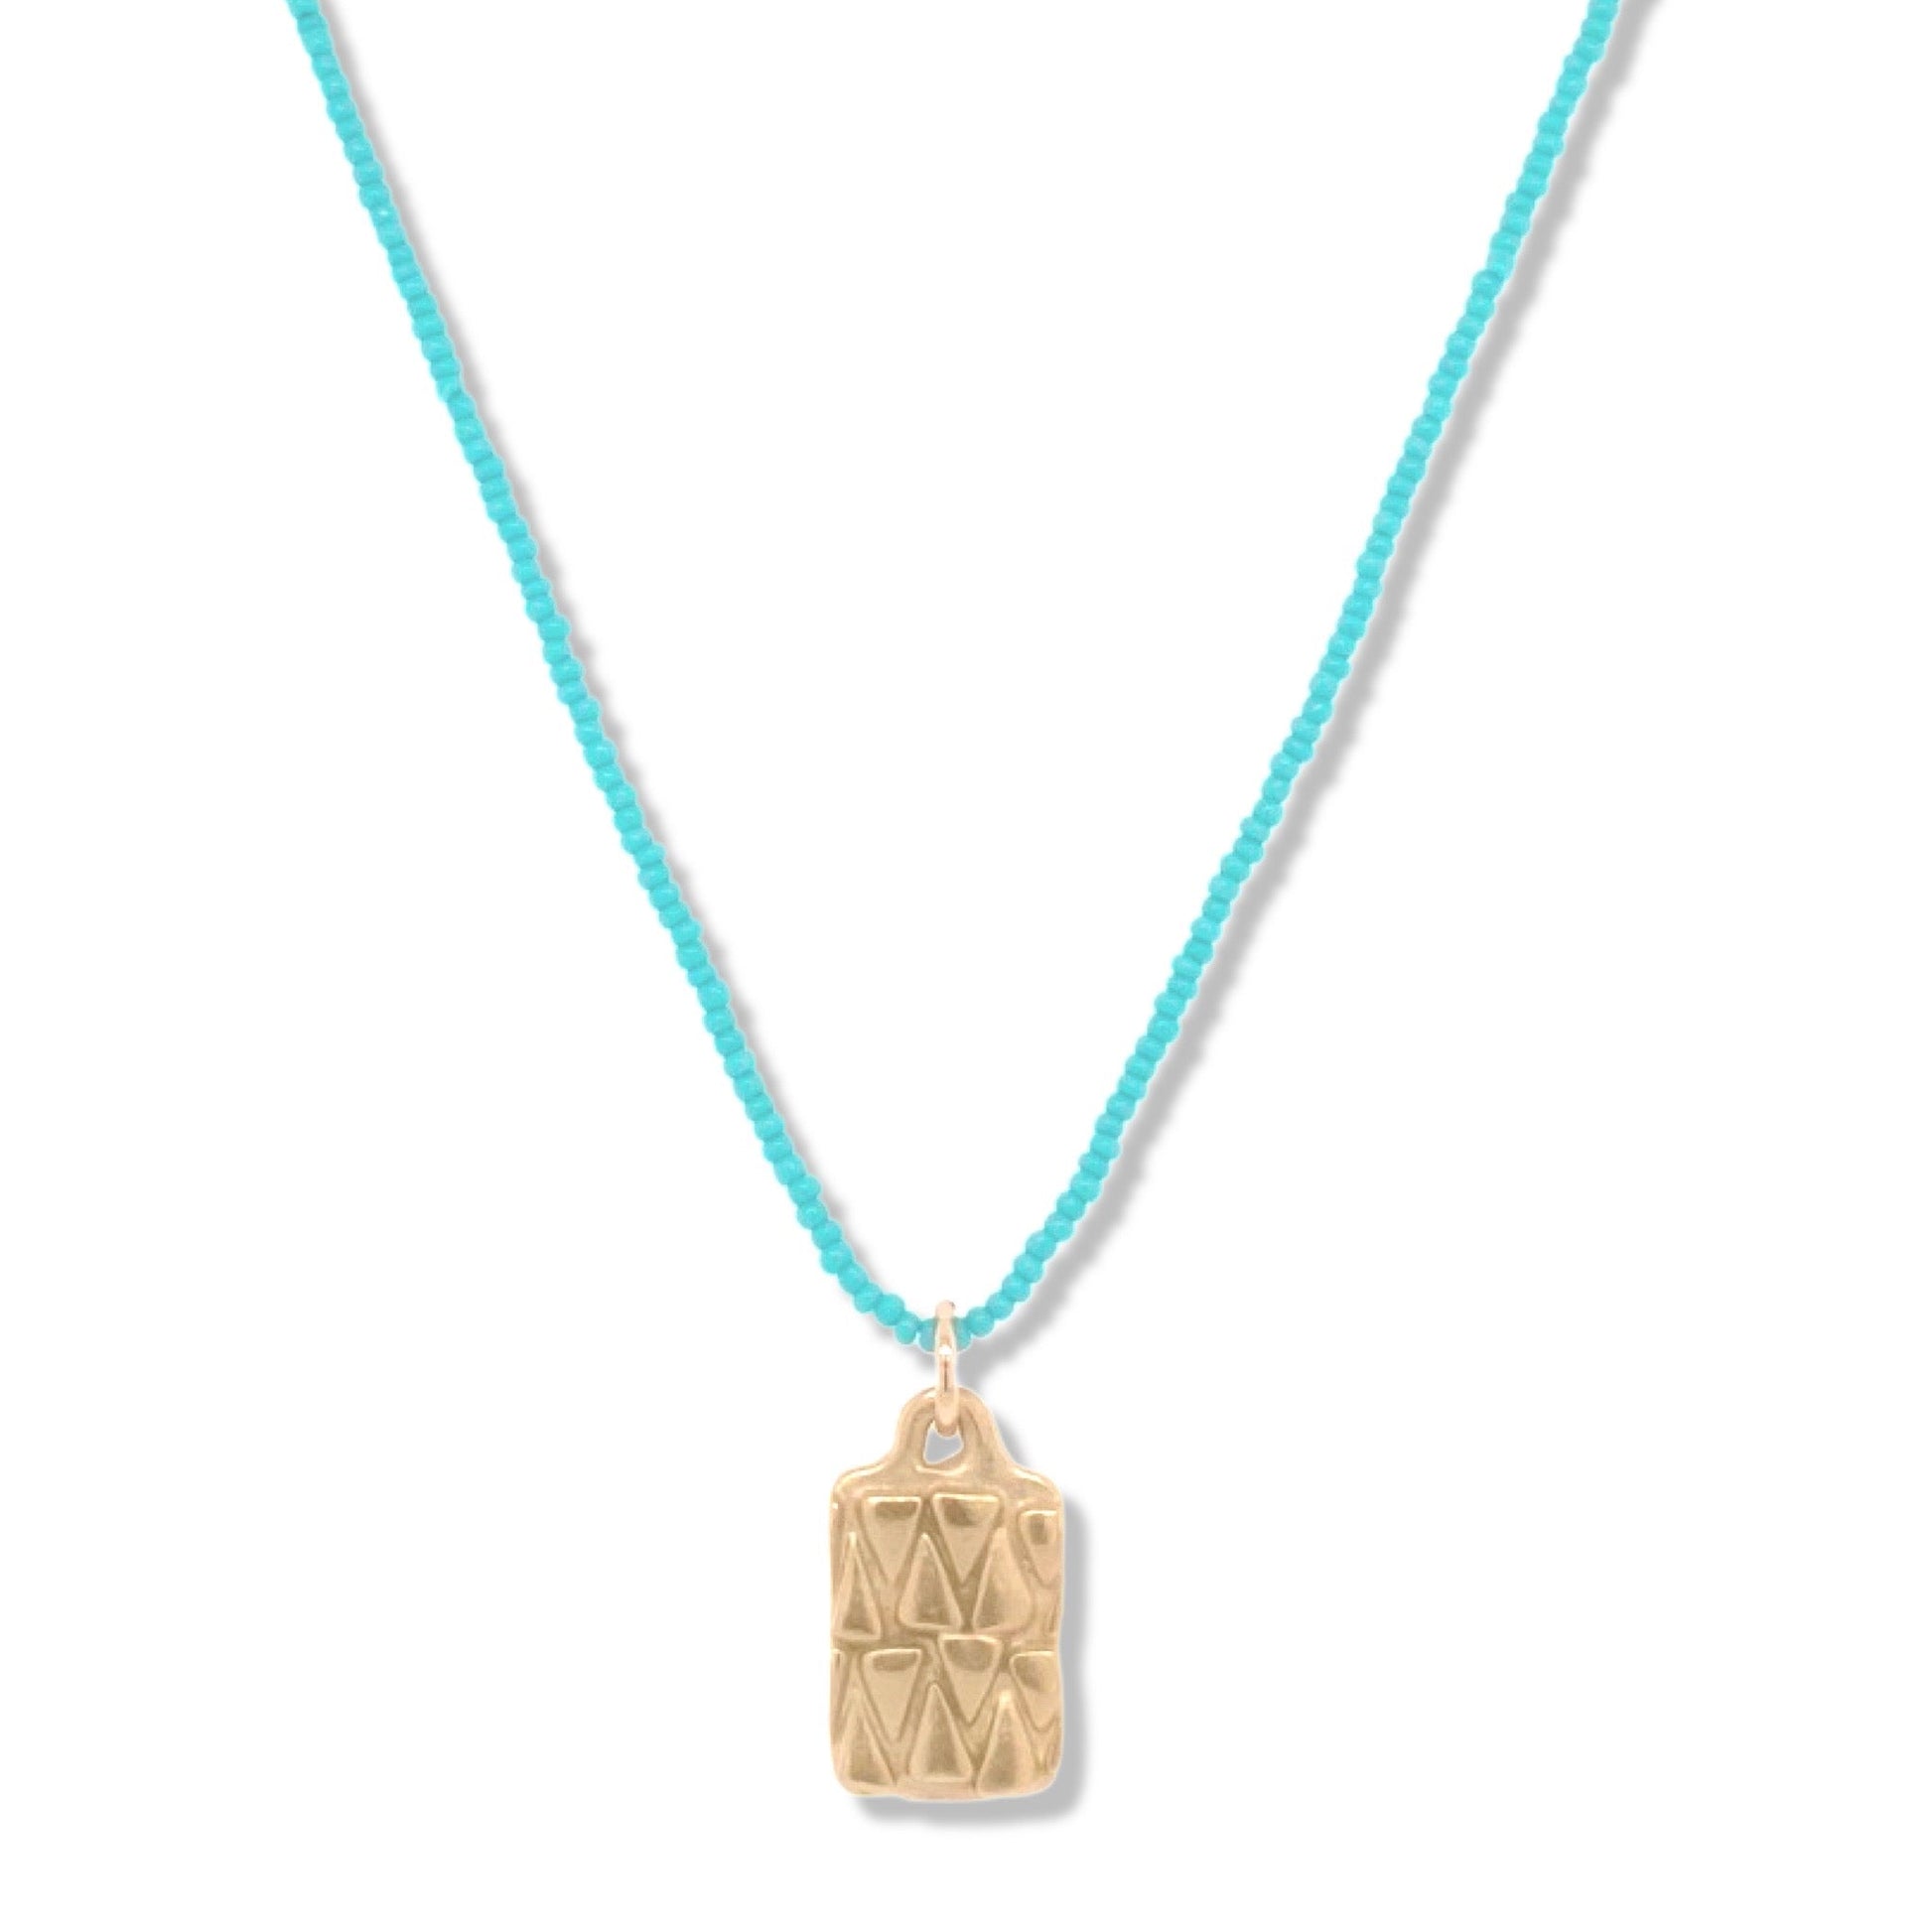 Tribal Mini Dog Tag in Gold on Turquoise Beads | Nalu |Nantucket